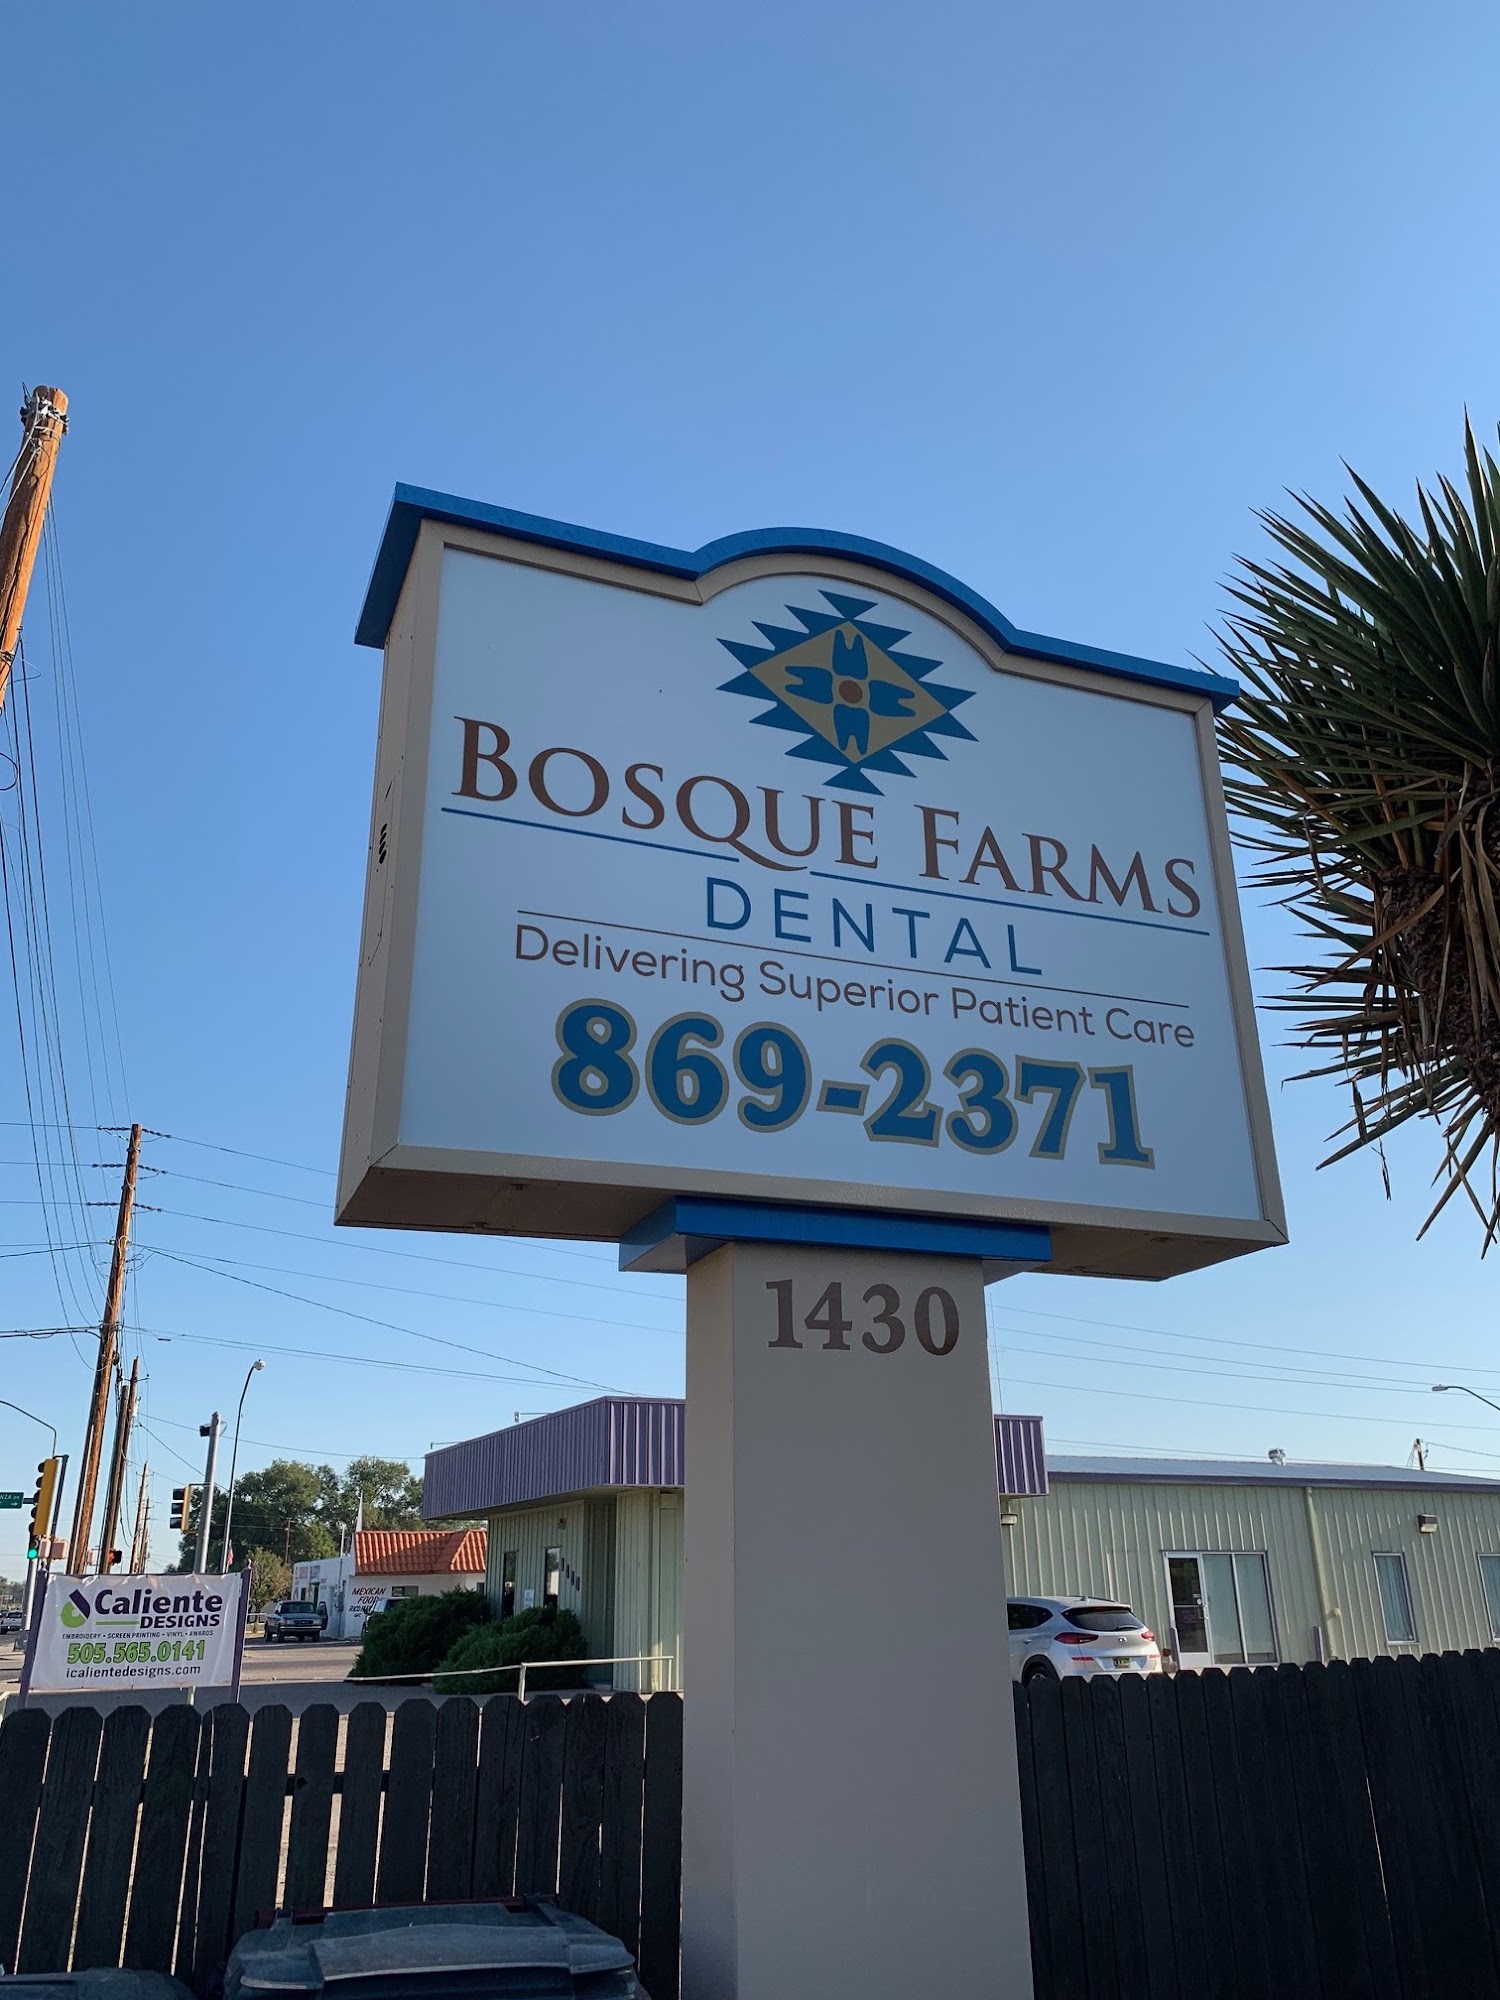 Bosque Farms Family Dentistry 1430 Bosque Farms Blvd, Bosque Farms New Mexico 87068